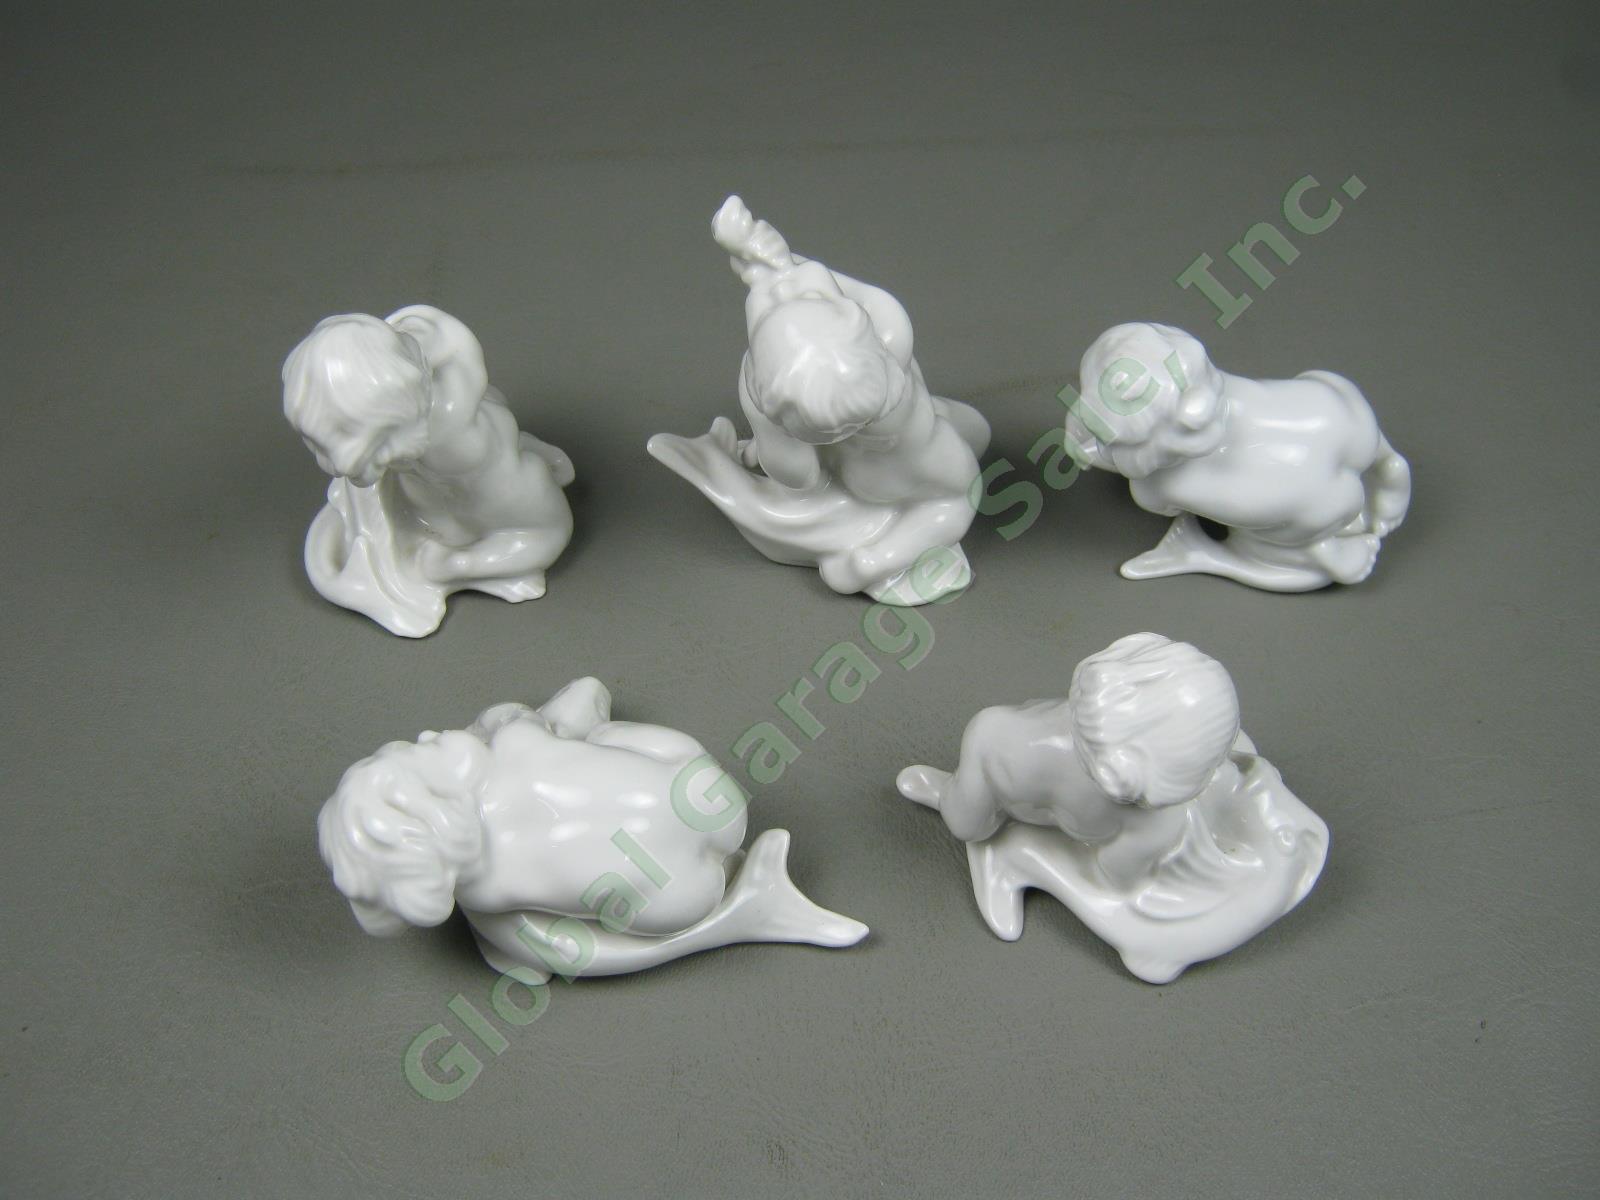 5 Bing Grondahl Kai Nielsen White Porcelain Blanc De Chine Boy Fish Figurine Set 1